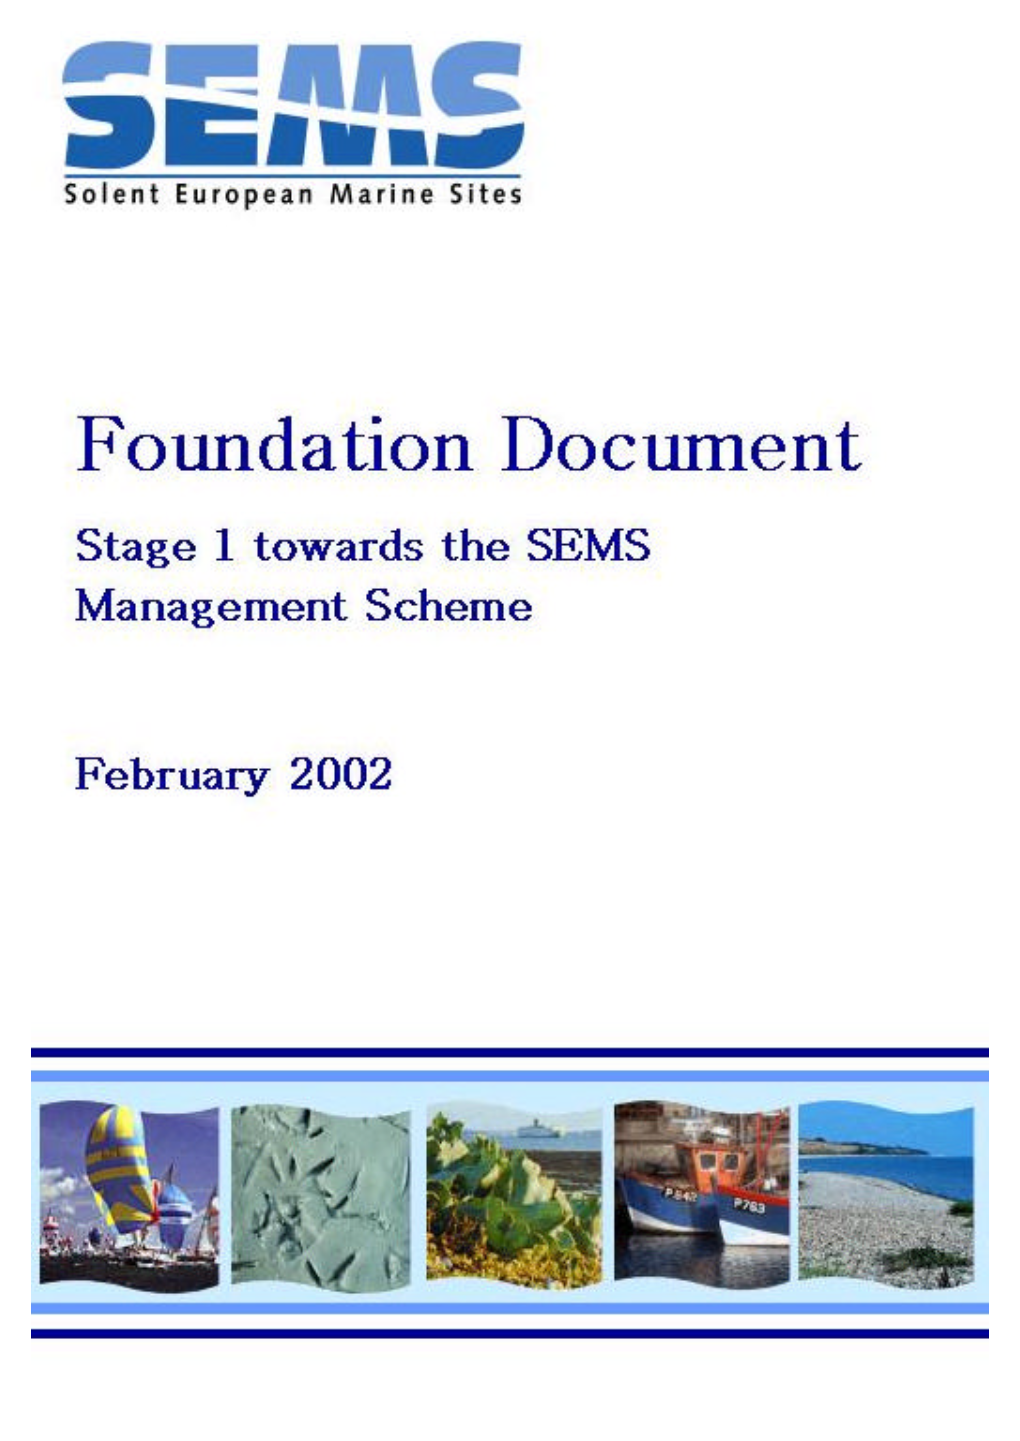 Foundation Document- Stage 1 Towards the SEMS Management Scheme